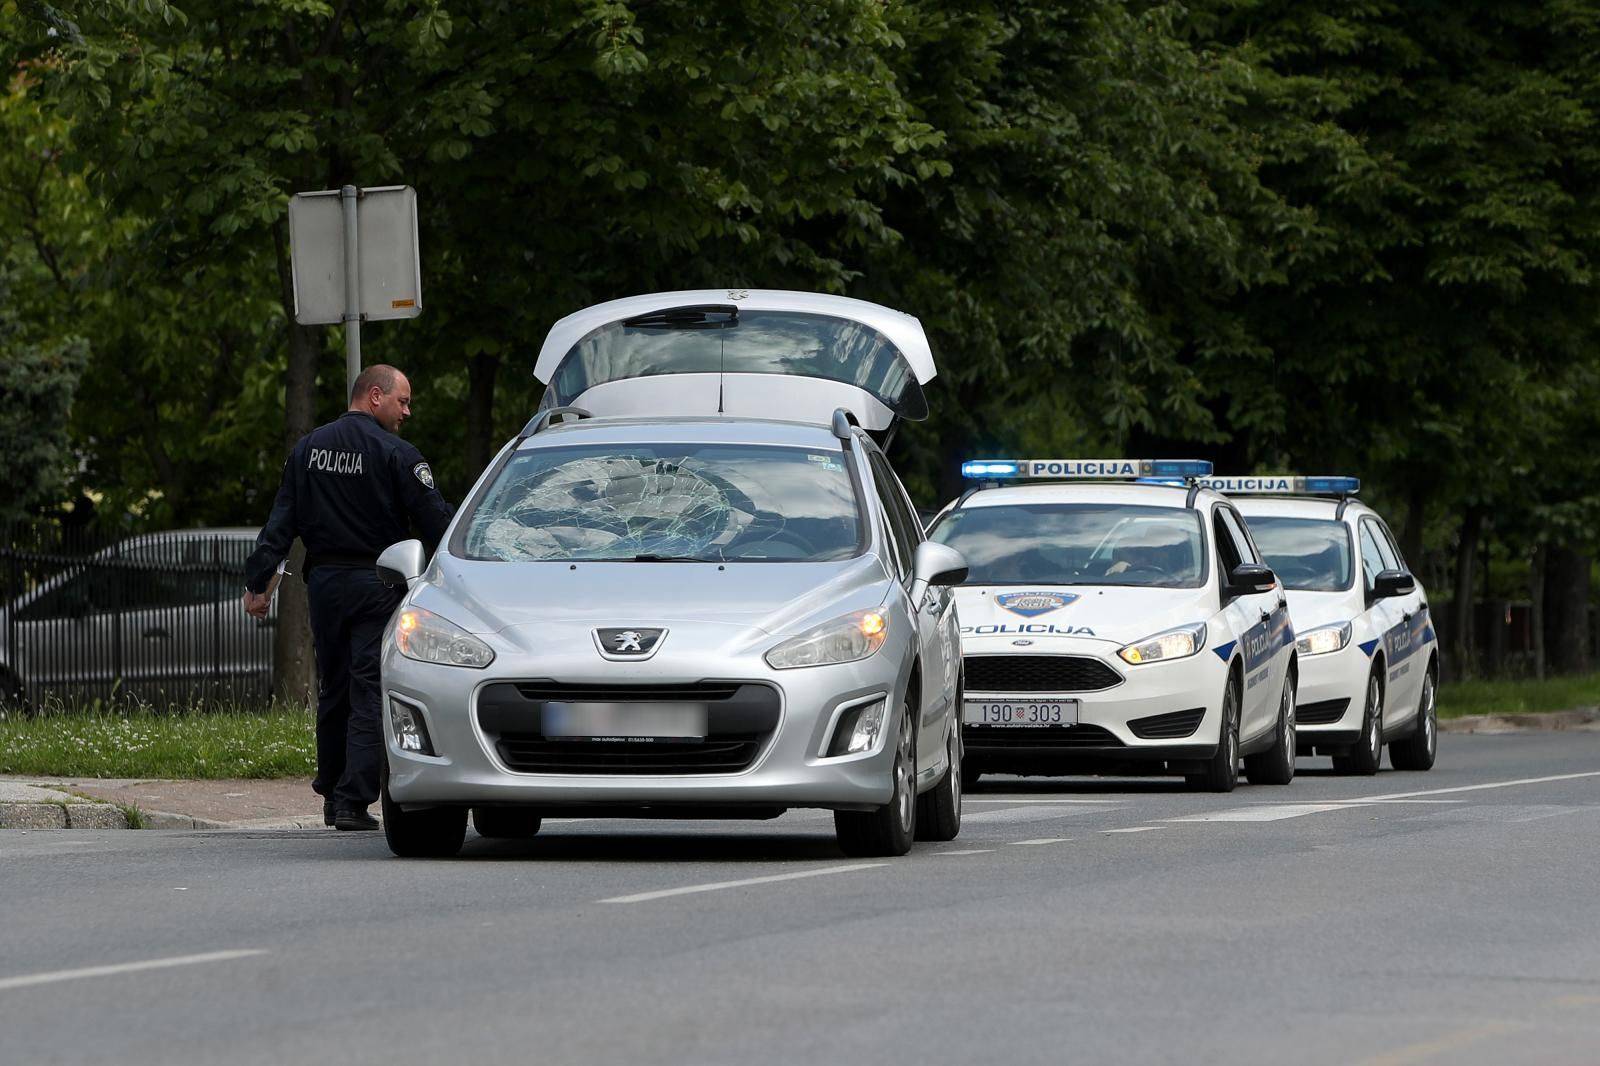 Velika Gorica: Autom naletio na mladića, prevezli ga u bolnicu